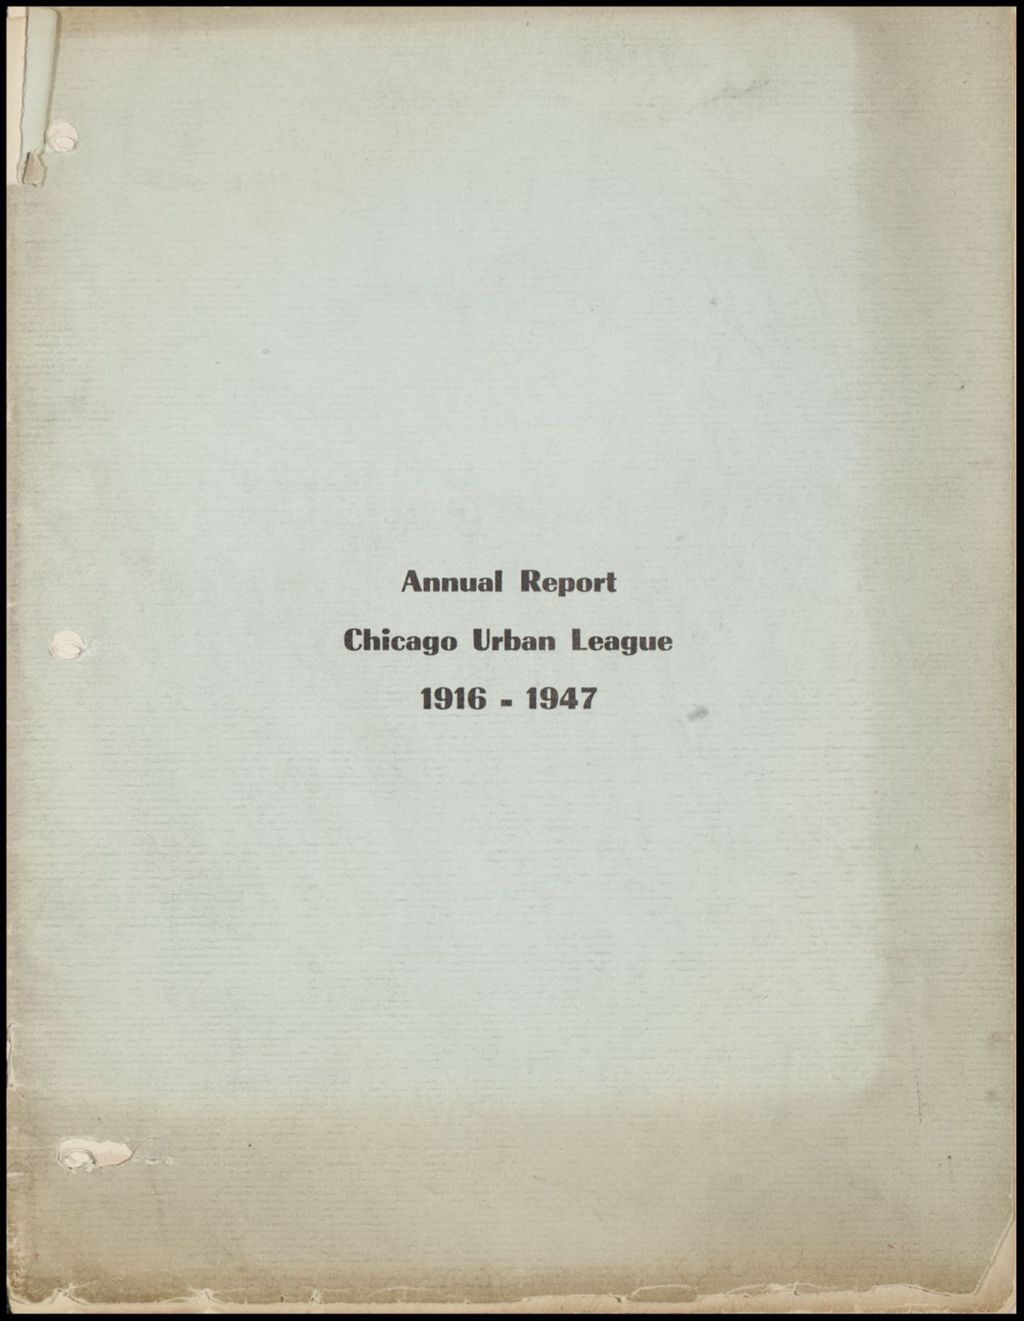 Miniature of Chicago Urban League report, 1947 (Folder I-19)